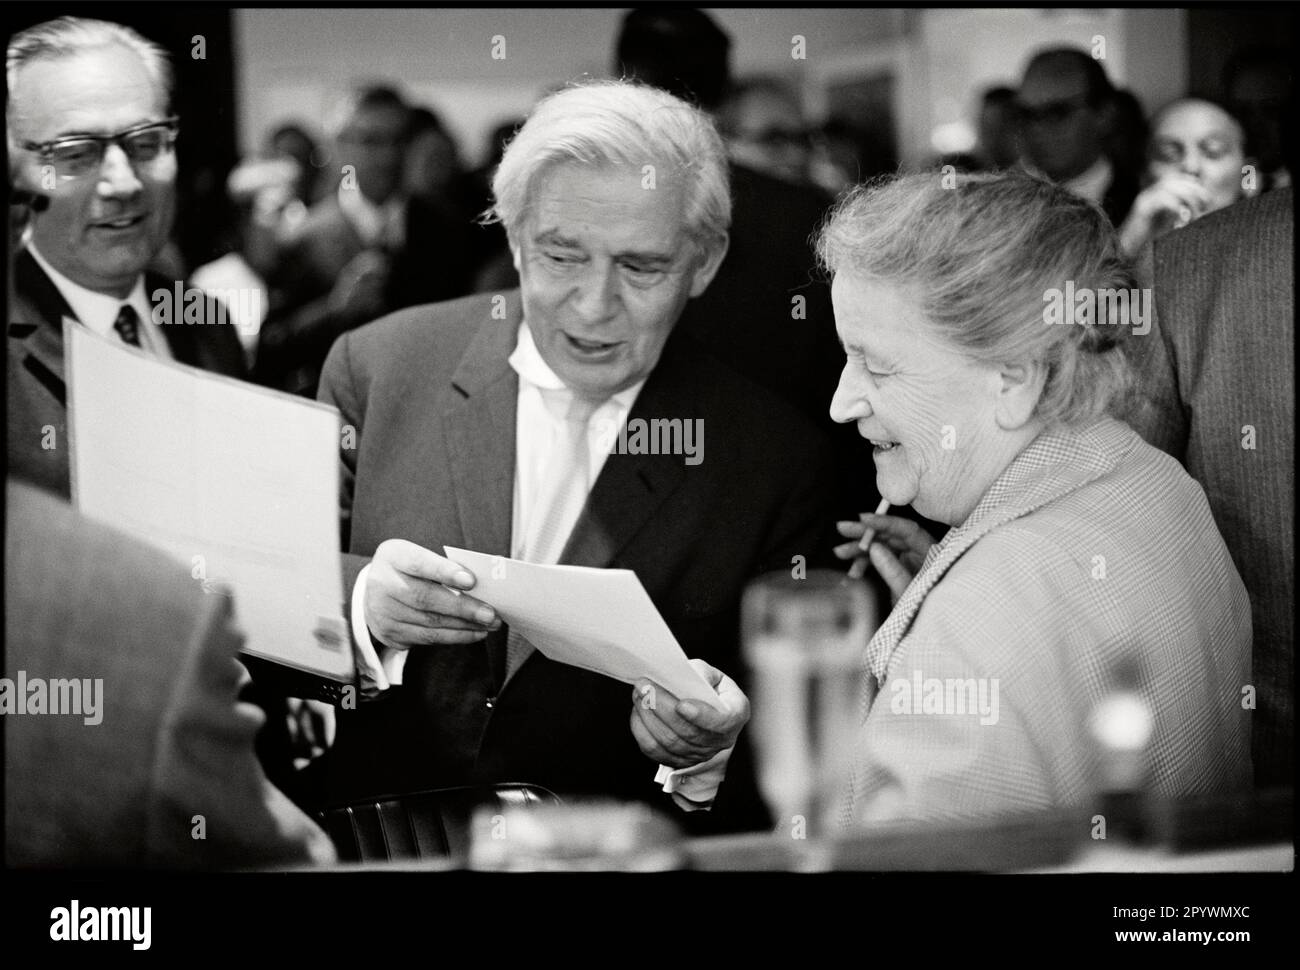 Germania. Amburgo. 1964. Direttore Josef Mueller-Marein. Celebrazione presso la redazione del settimanale Die Zeit. M-GE-ZEI-033 Copyright Notice: Max Scheler/SZ Photo. Foto Stock